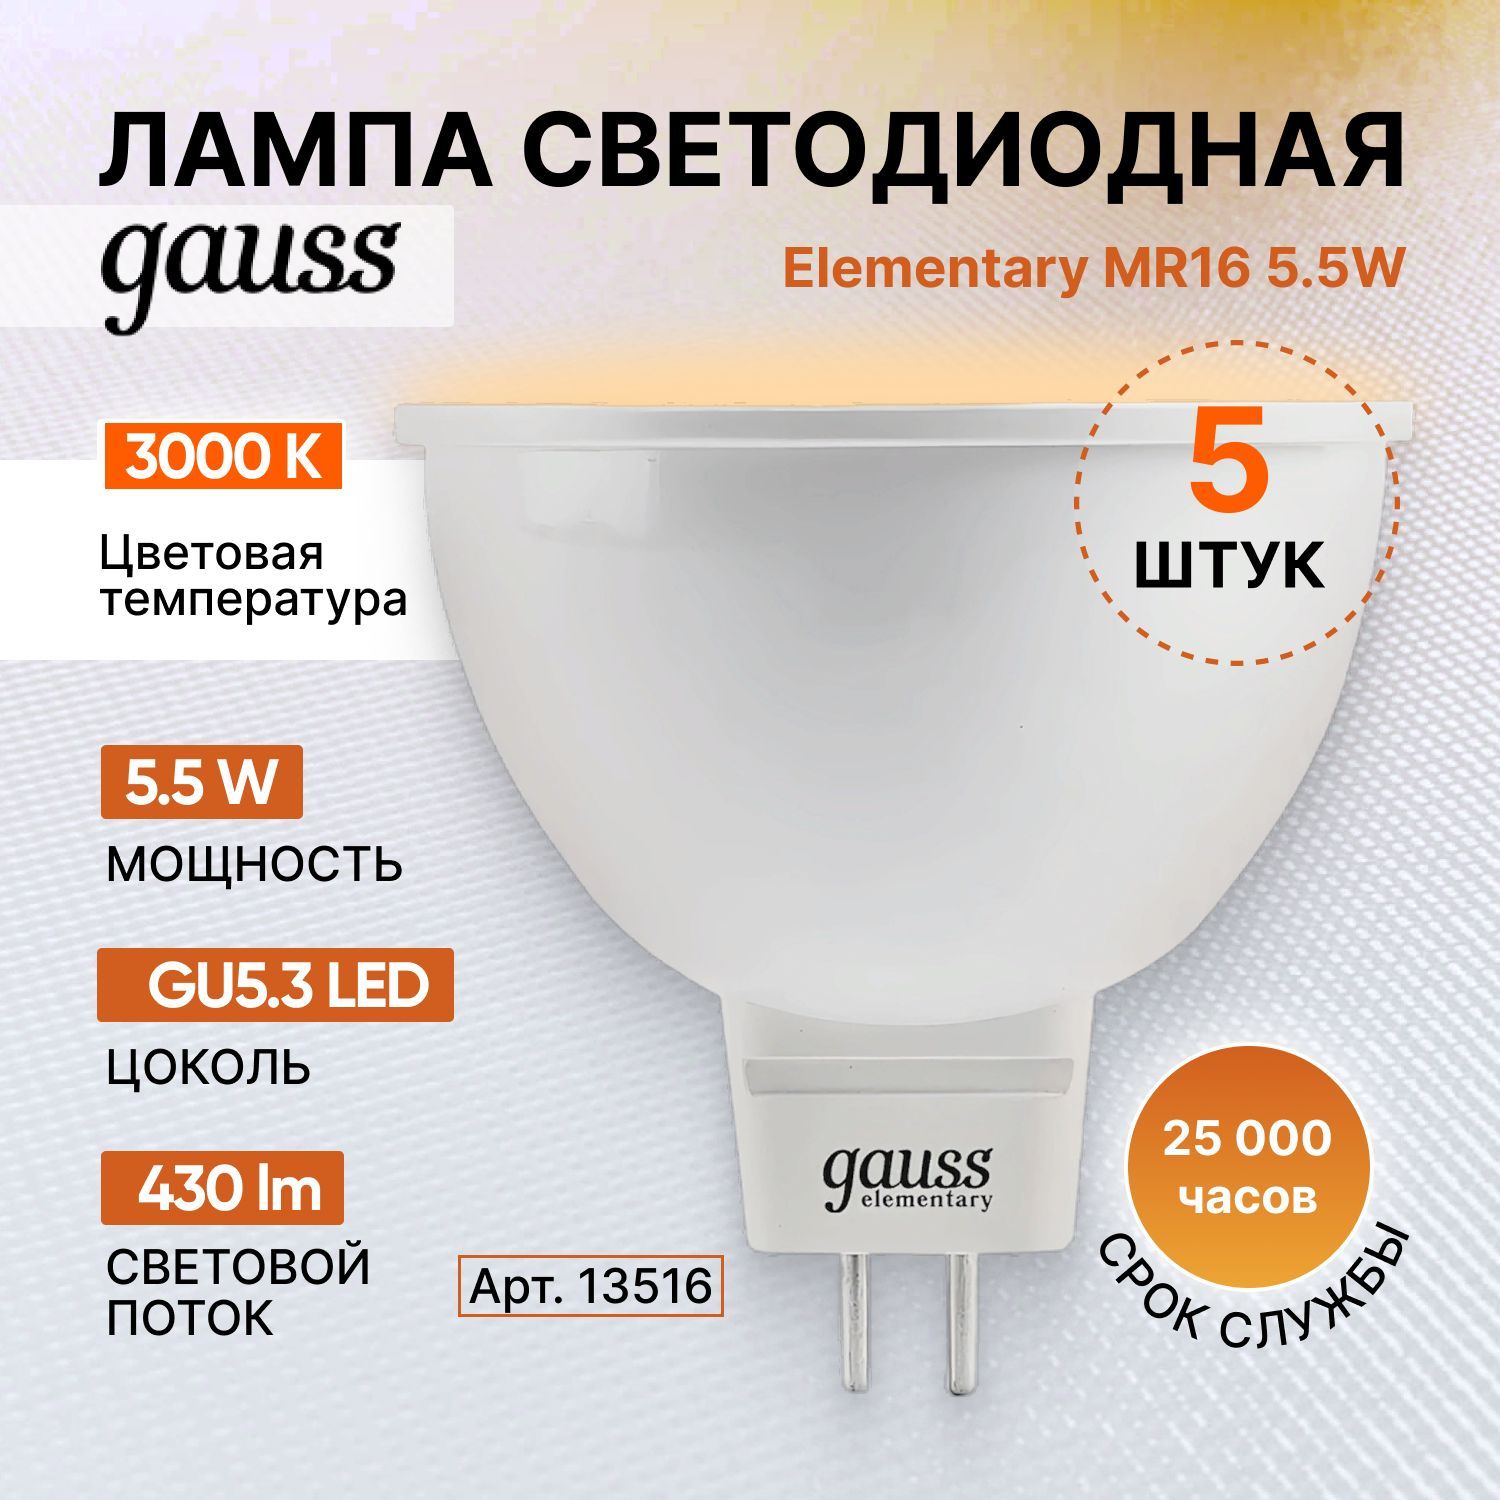 Gauss elementary mr16. Лампа Gauss led 7w 100-240v 50-60hz. Софит лампа светодиодная. Gauss Elementary logo.